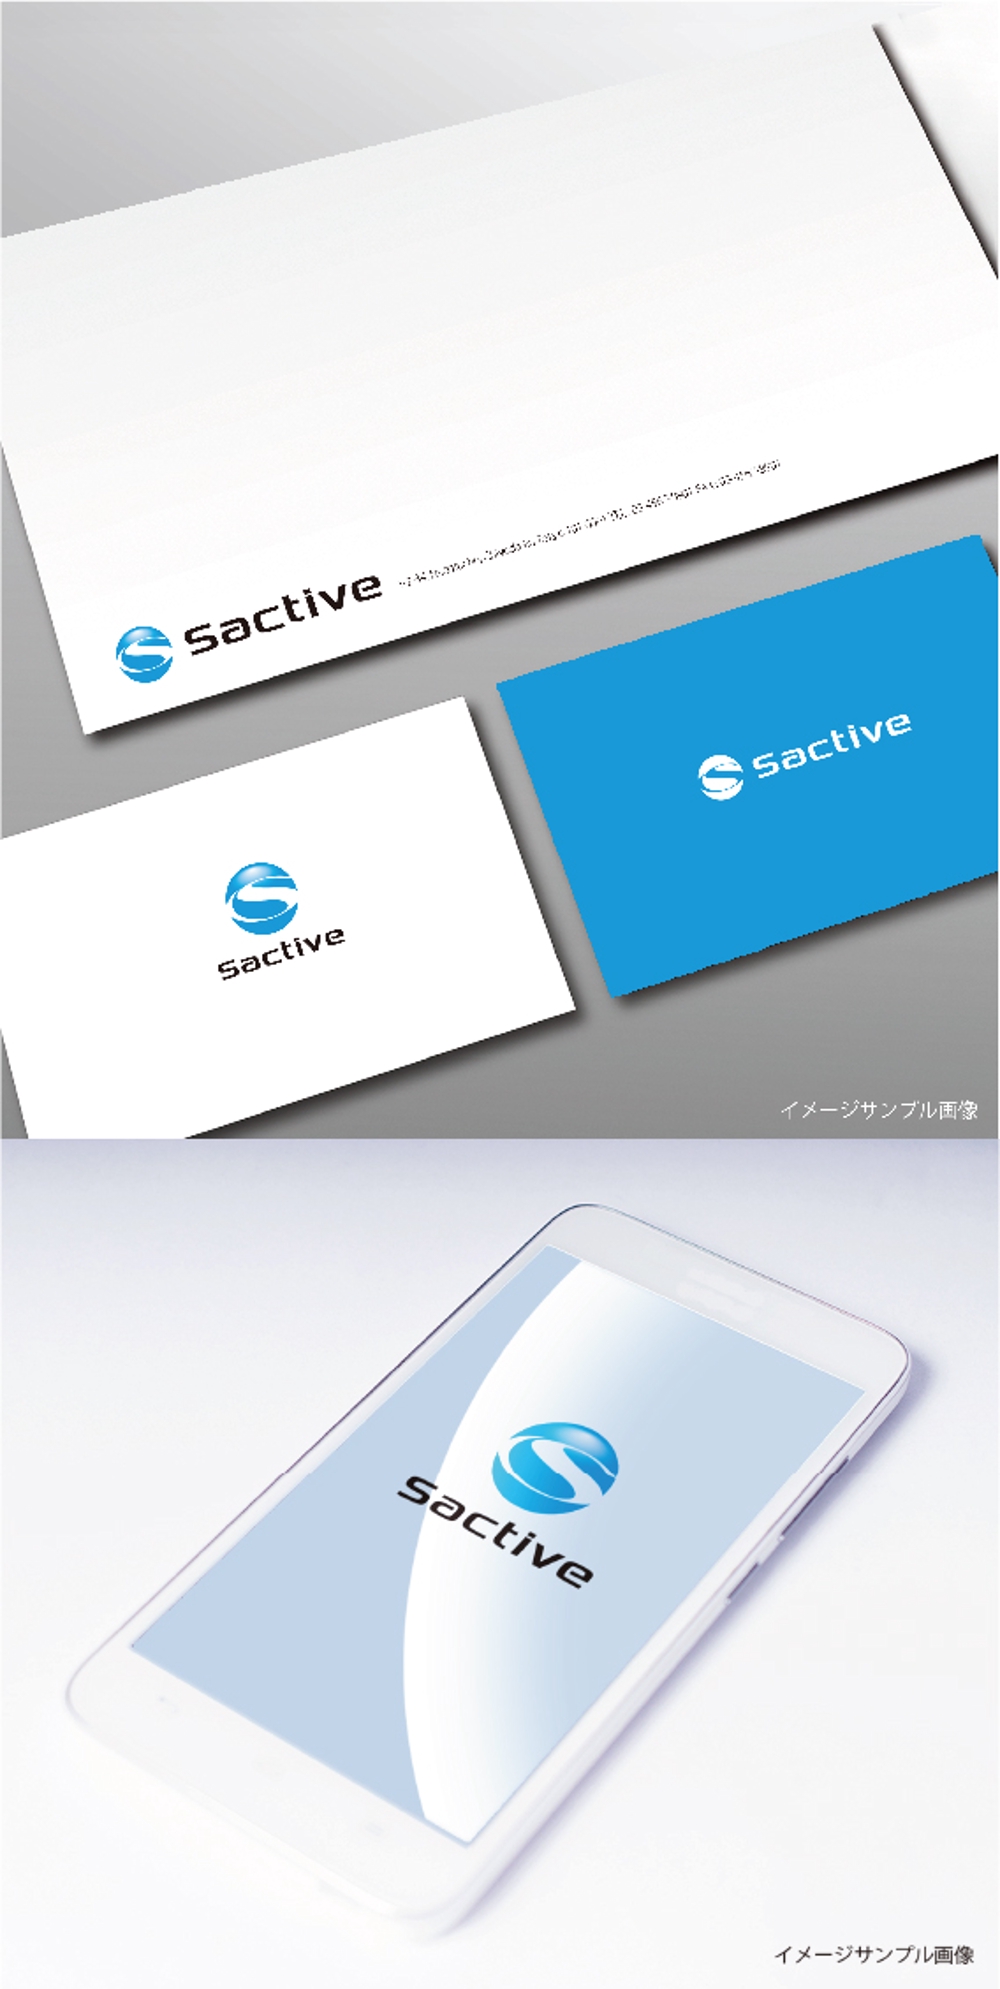 Sactive_image.jpg